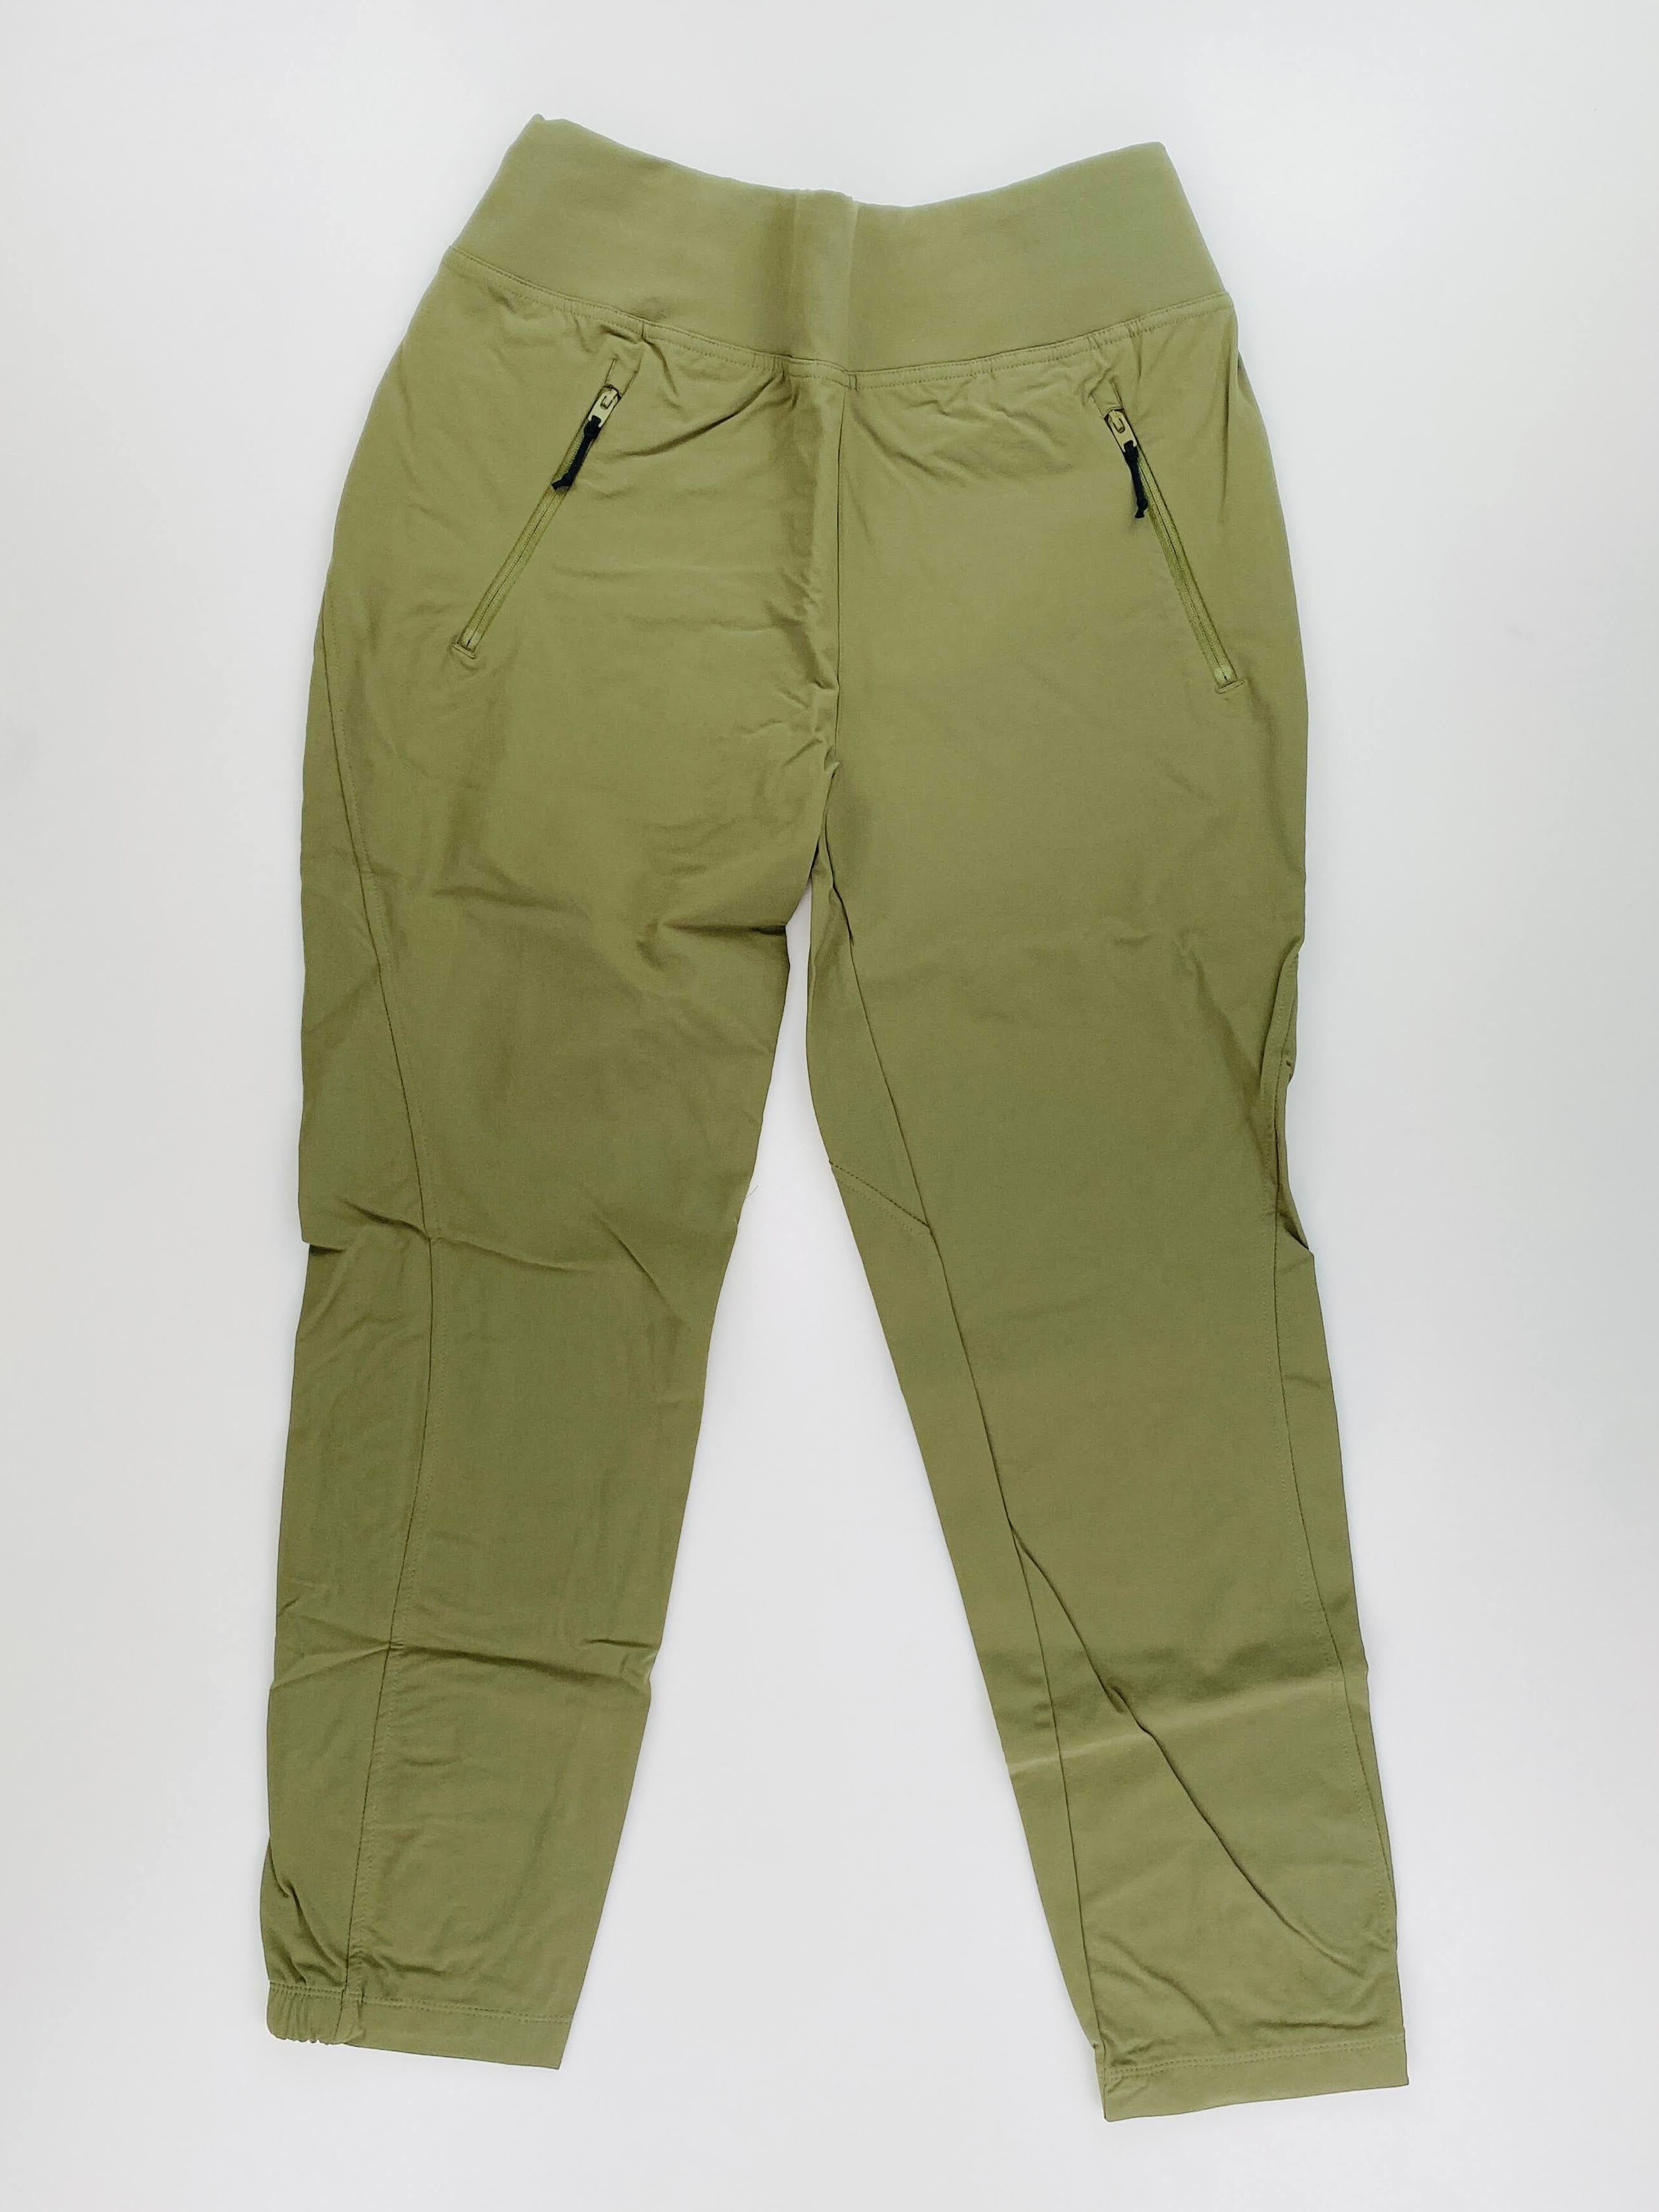 Mountain Hardwear Chockstone™ Women's Pull On Pant Regular - Pantaloni di seconda mano - Donna - Verde oliva - XS | Hardloop